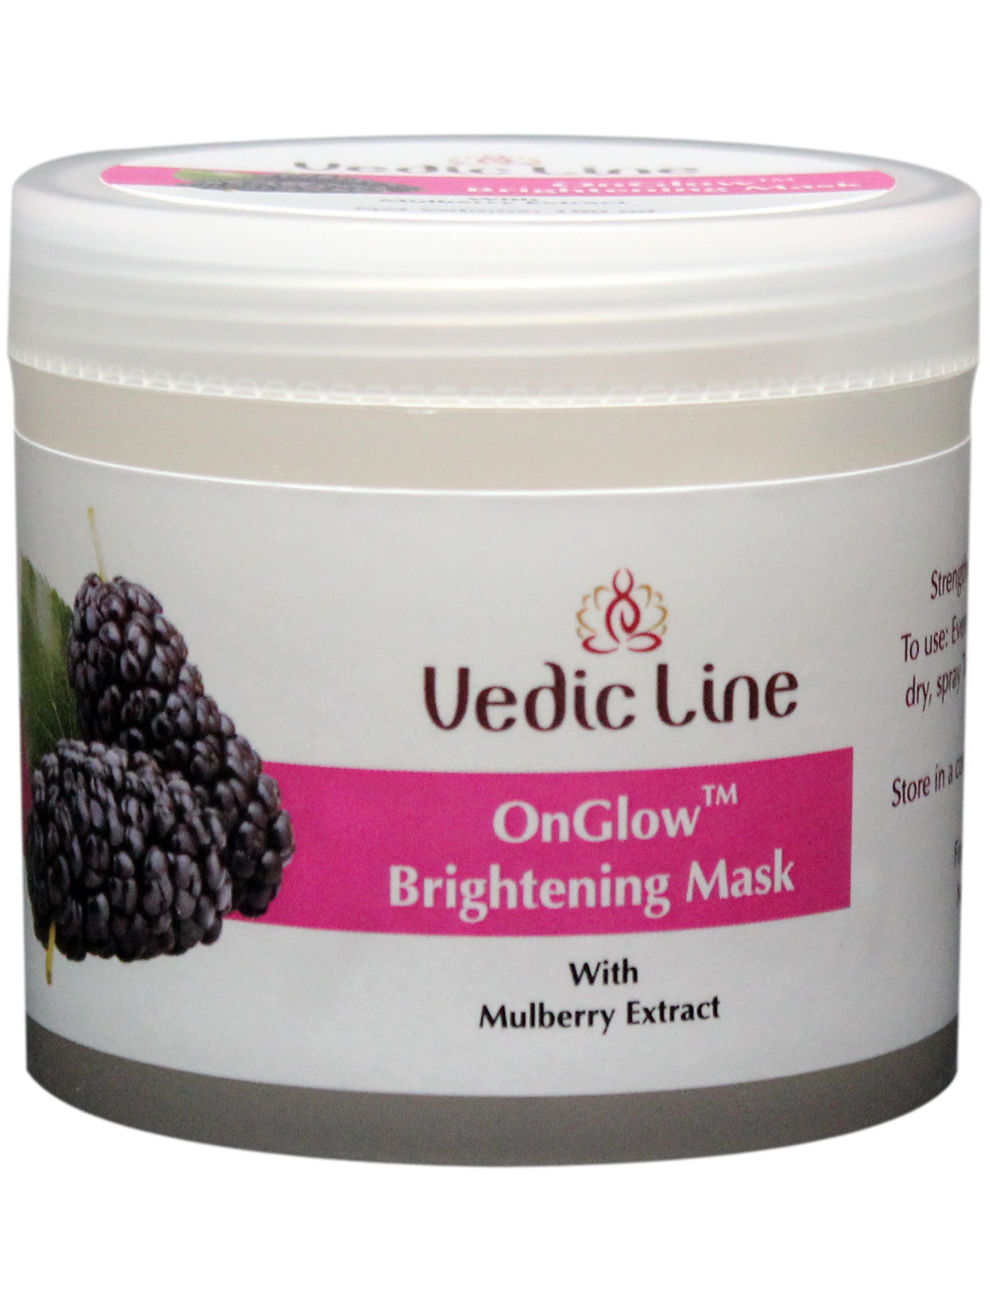 Vedic Line OnGlow Brightening Mask